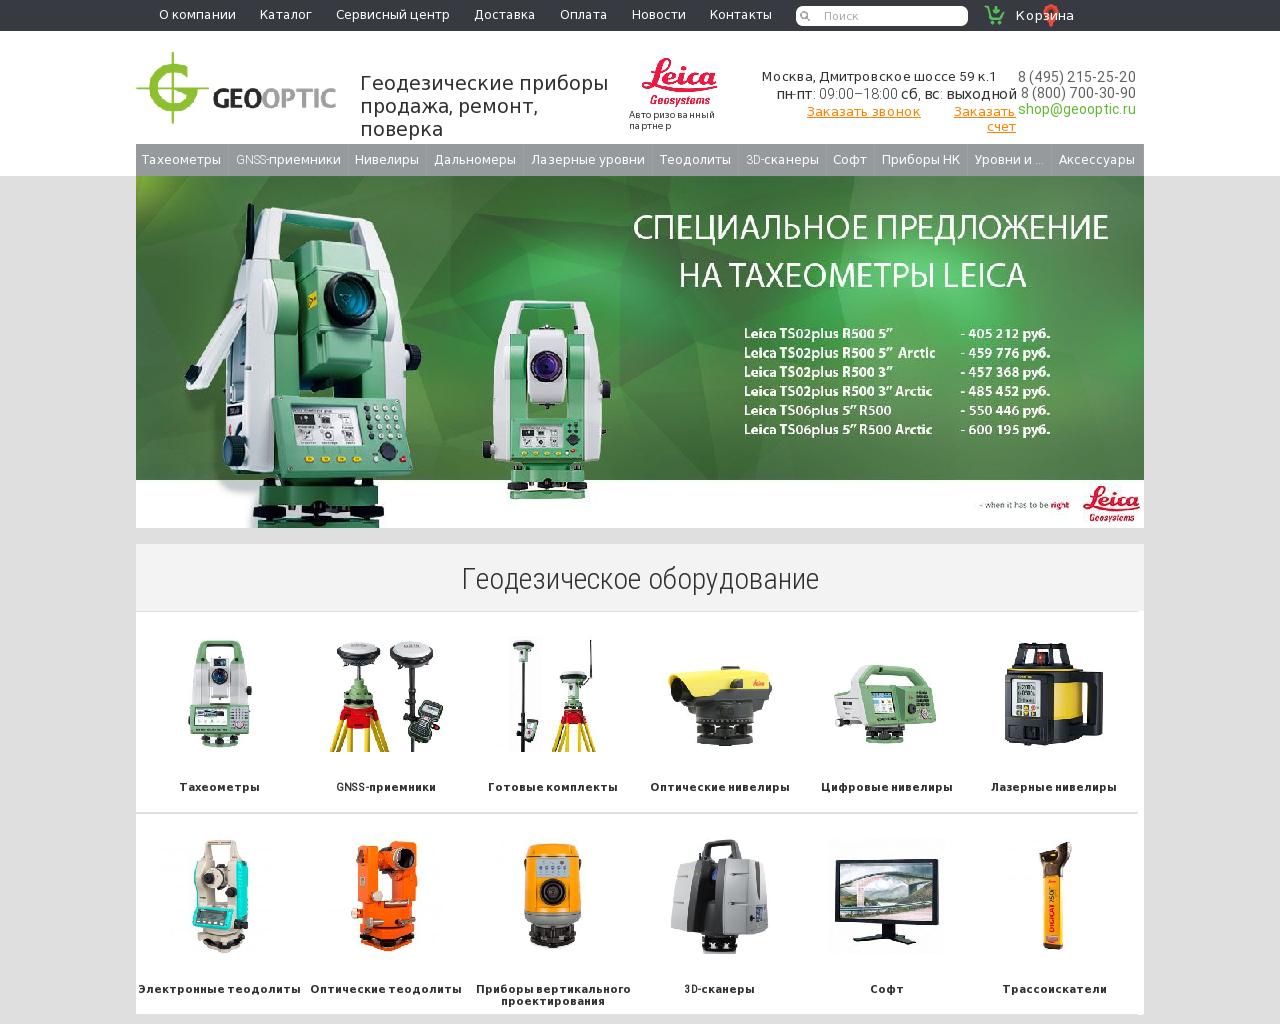 Изображение сайта geooptic.ru в разрешении 1280x1024